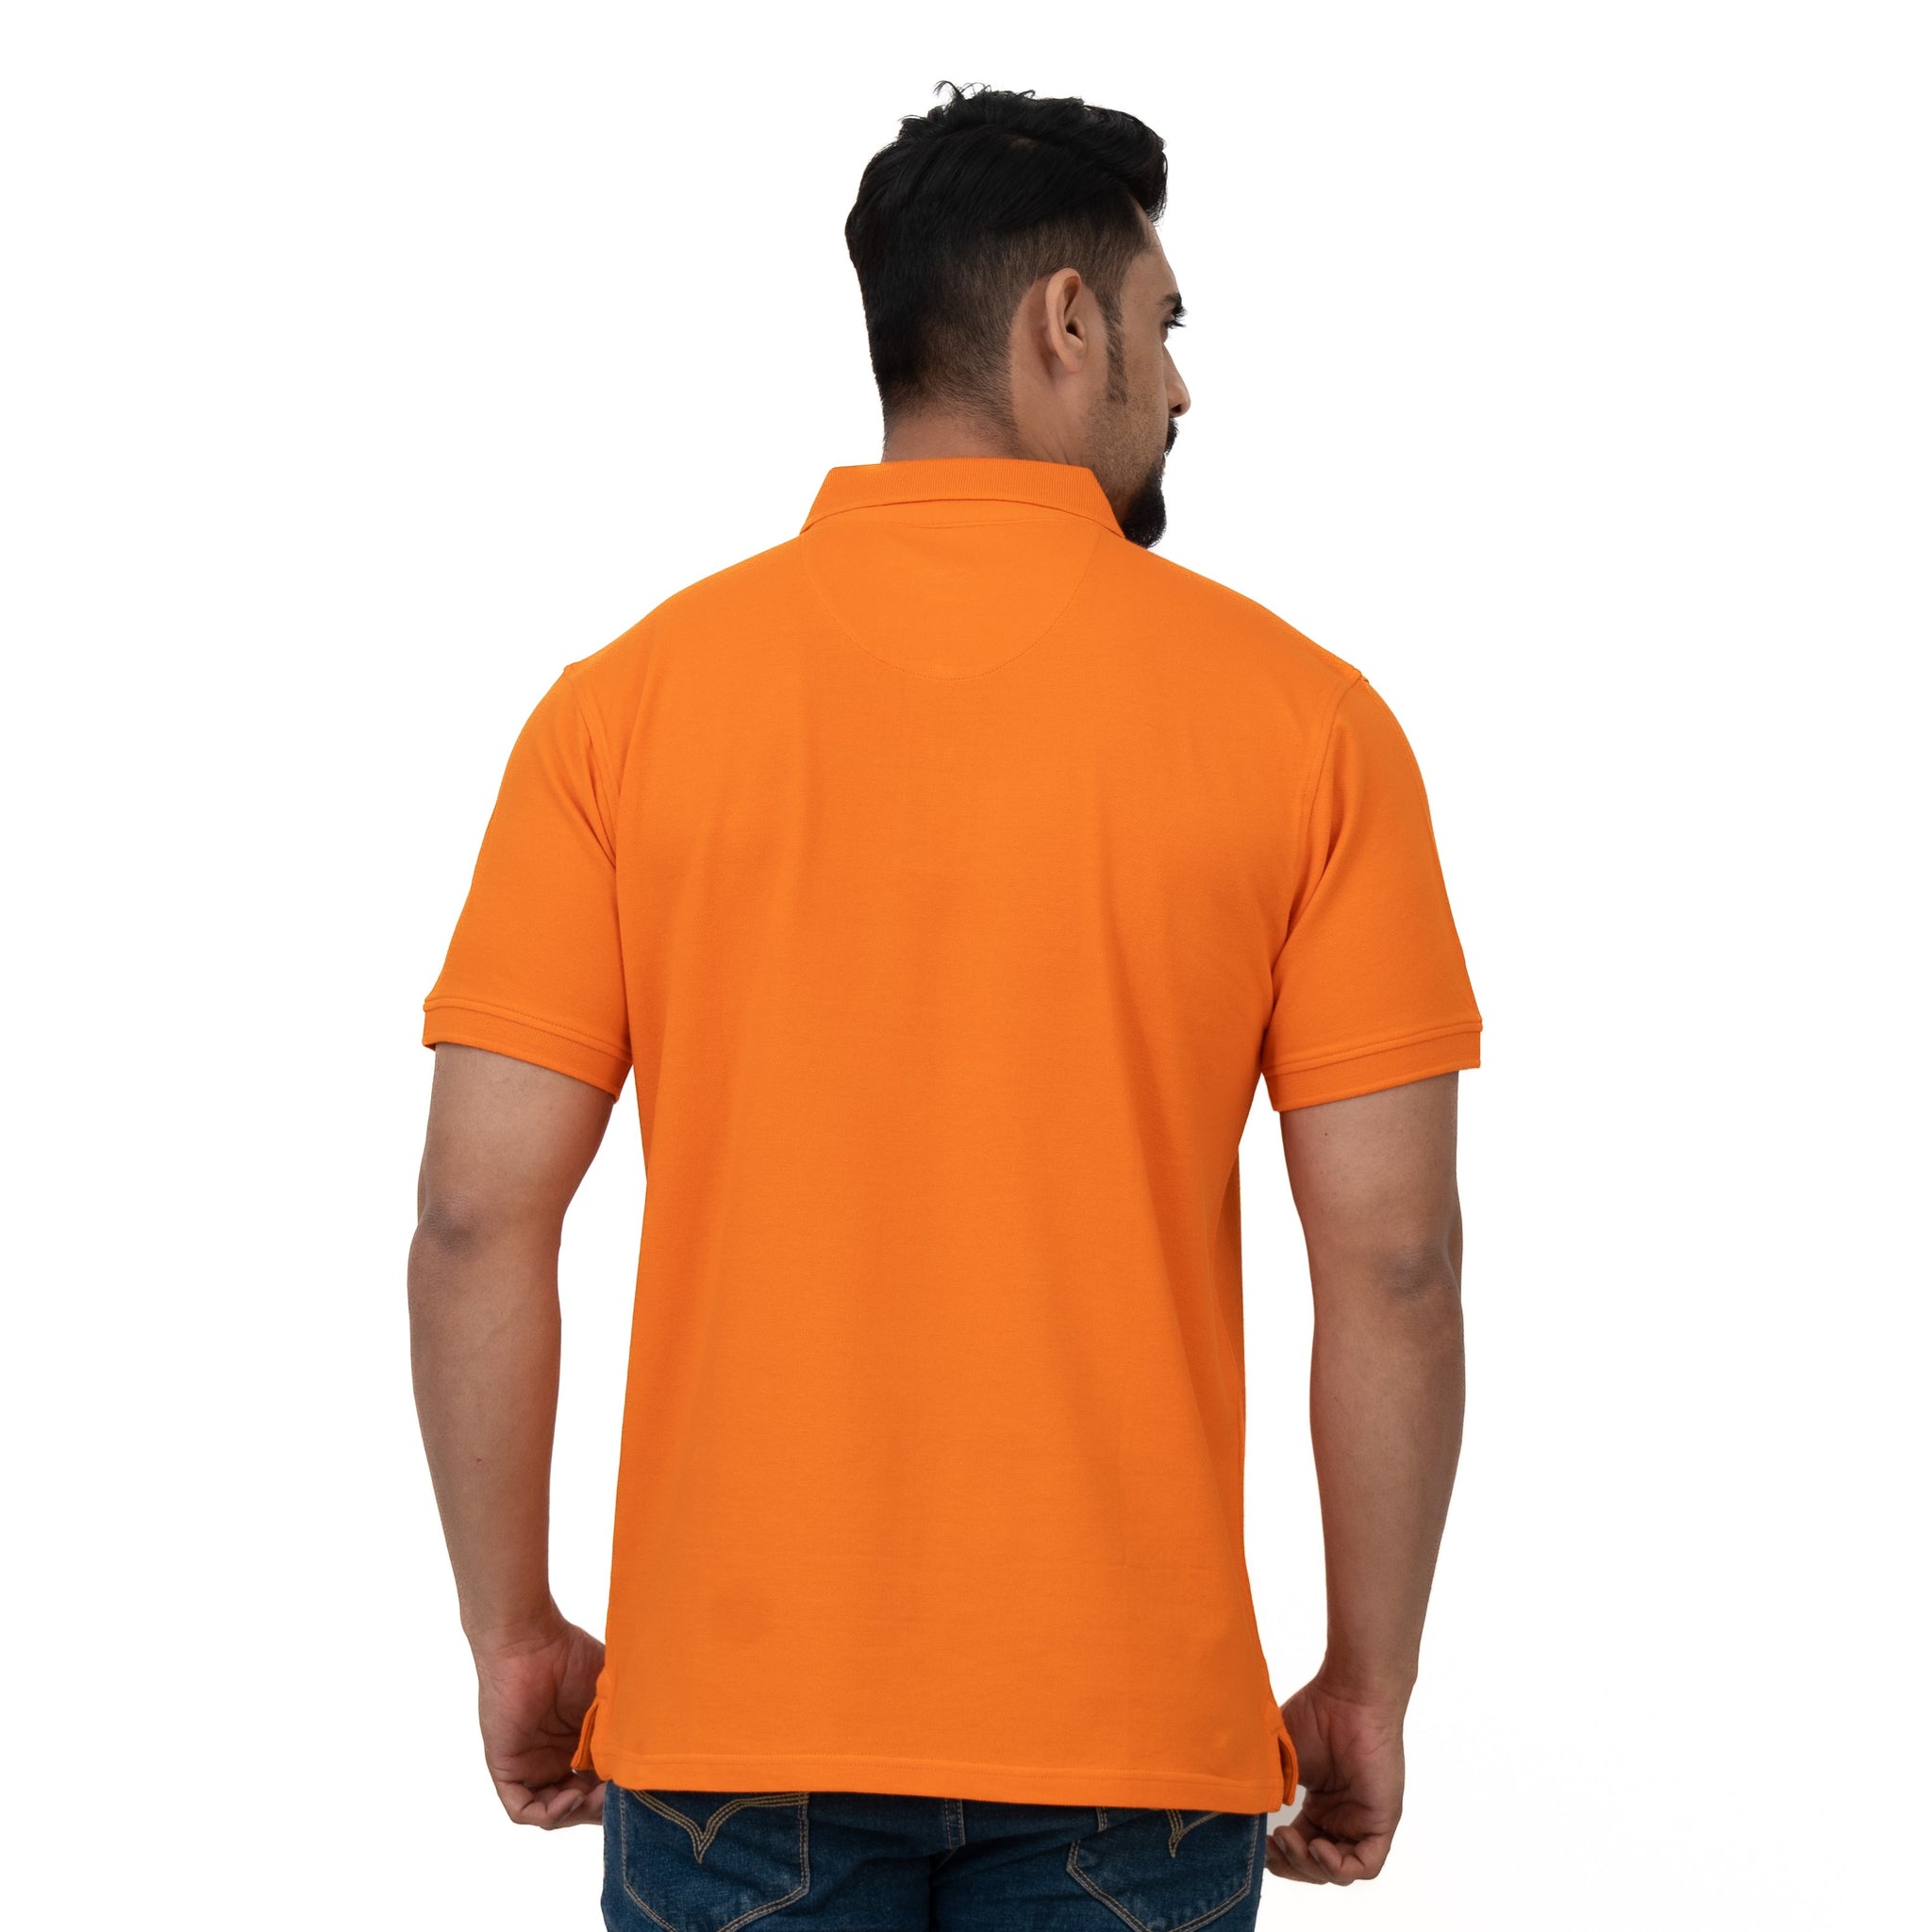 Cotstyle Cotton Fabrics Polo Short Length Plain Half Sleeve Casual & Daily Wear Men's T Shirts - Pack of 1 - Orange Colour